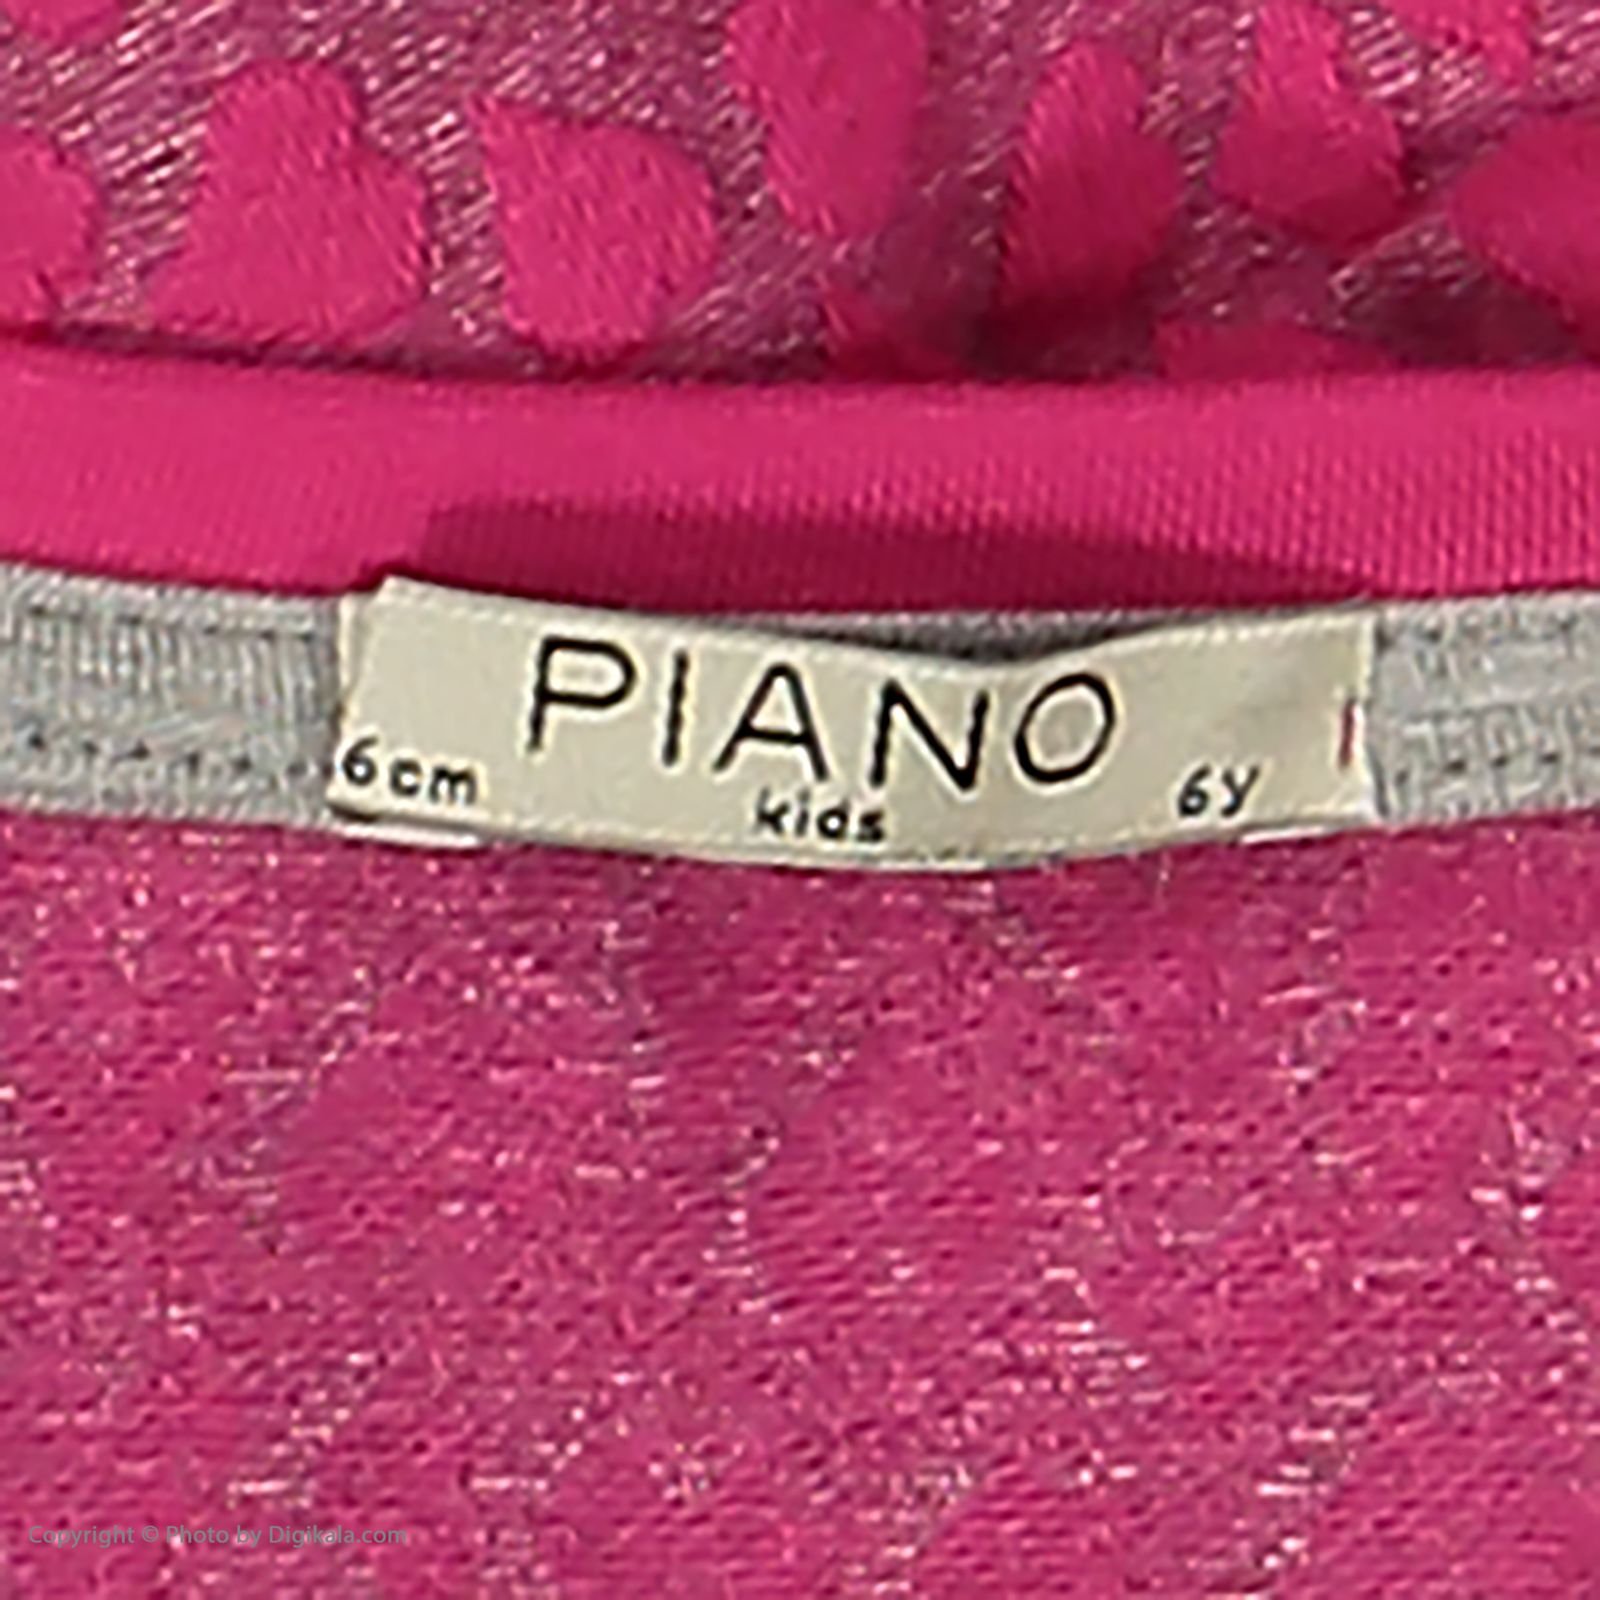 نیم تنه دخترانه پیانو مدل 1009009901685-66 -  - 5